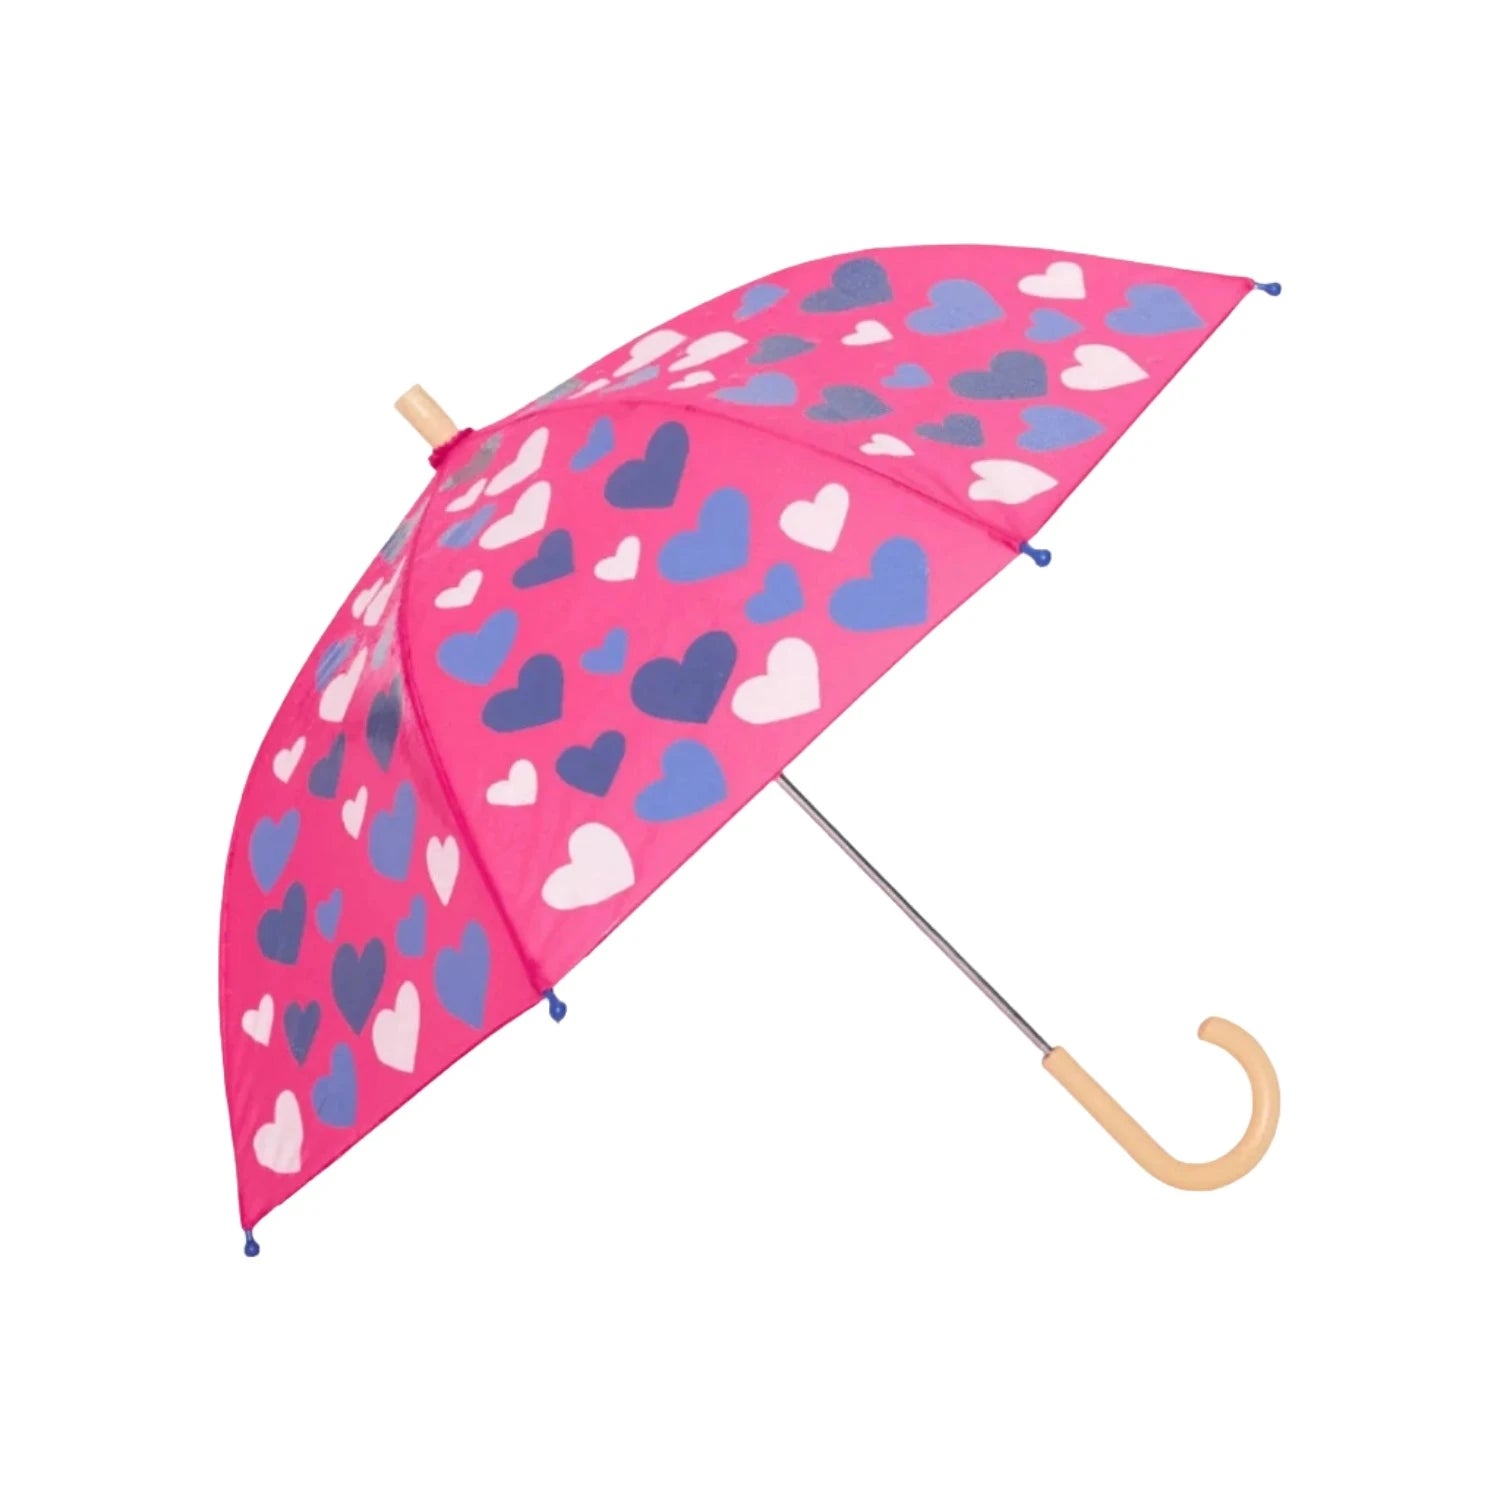 K's Umbrella